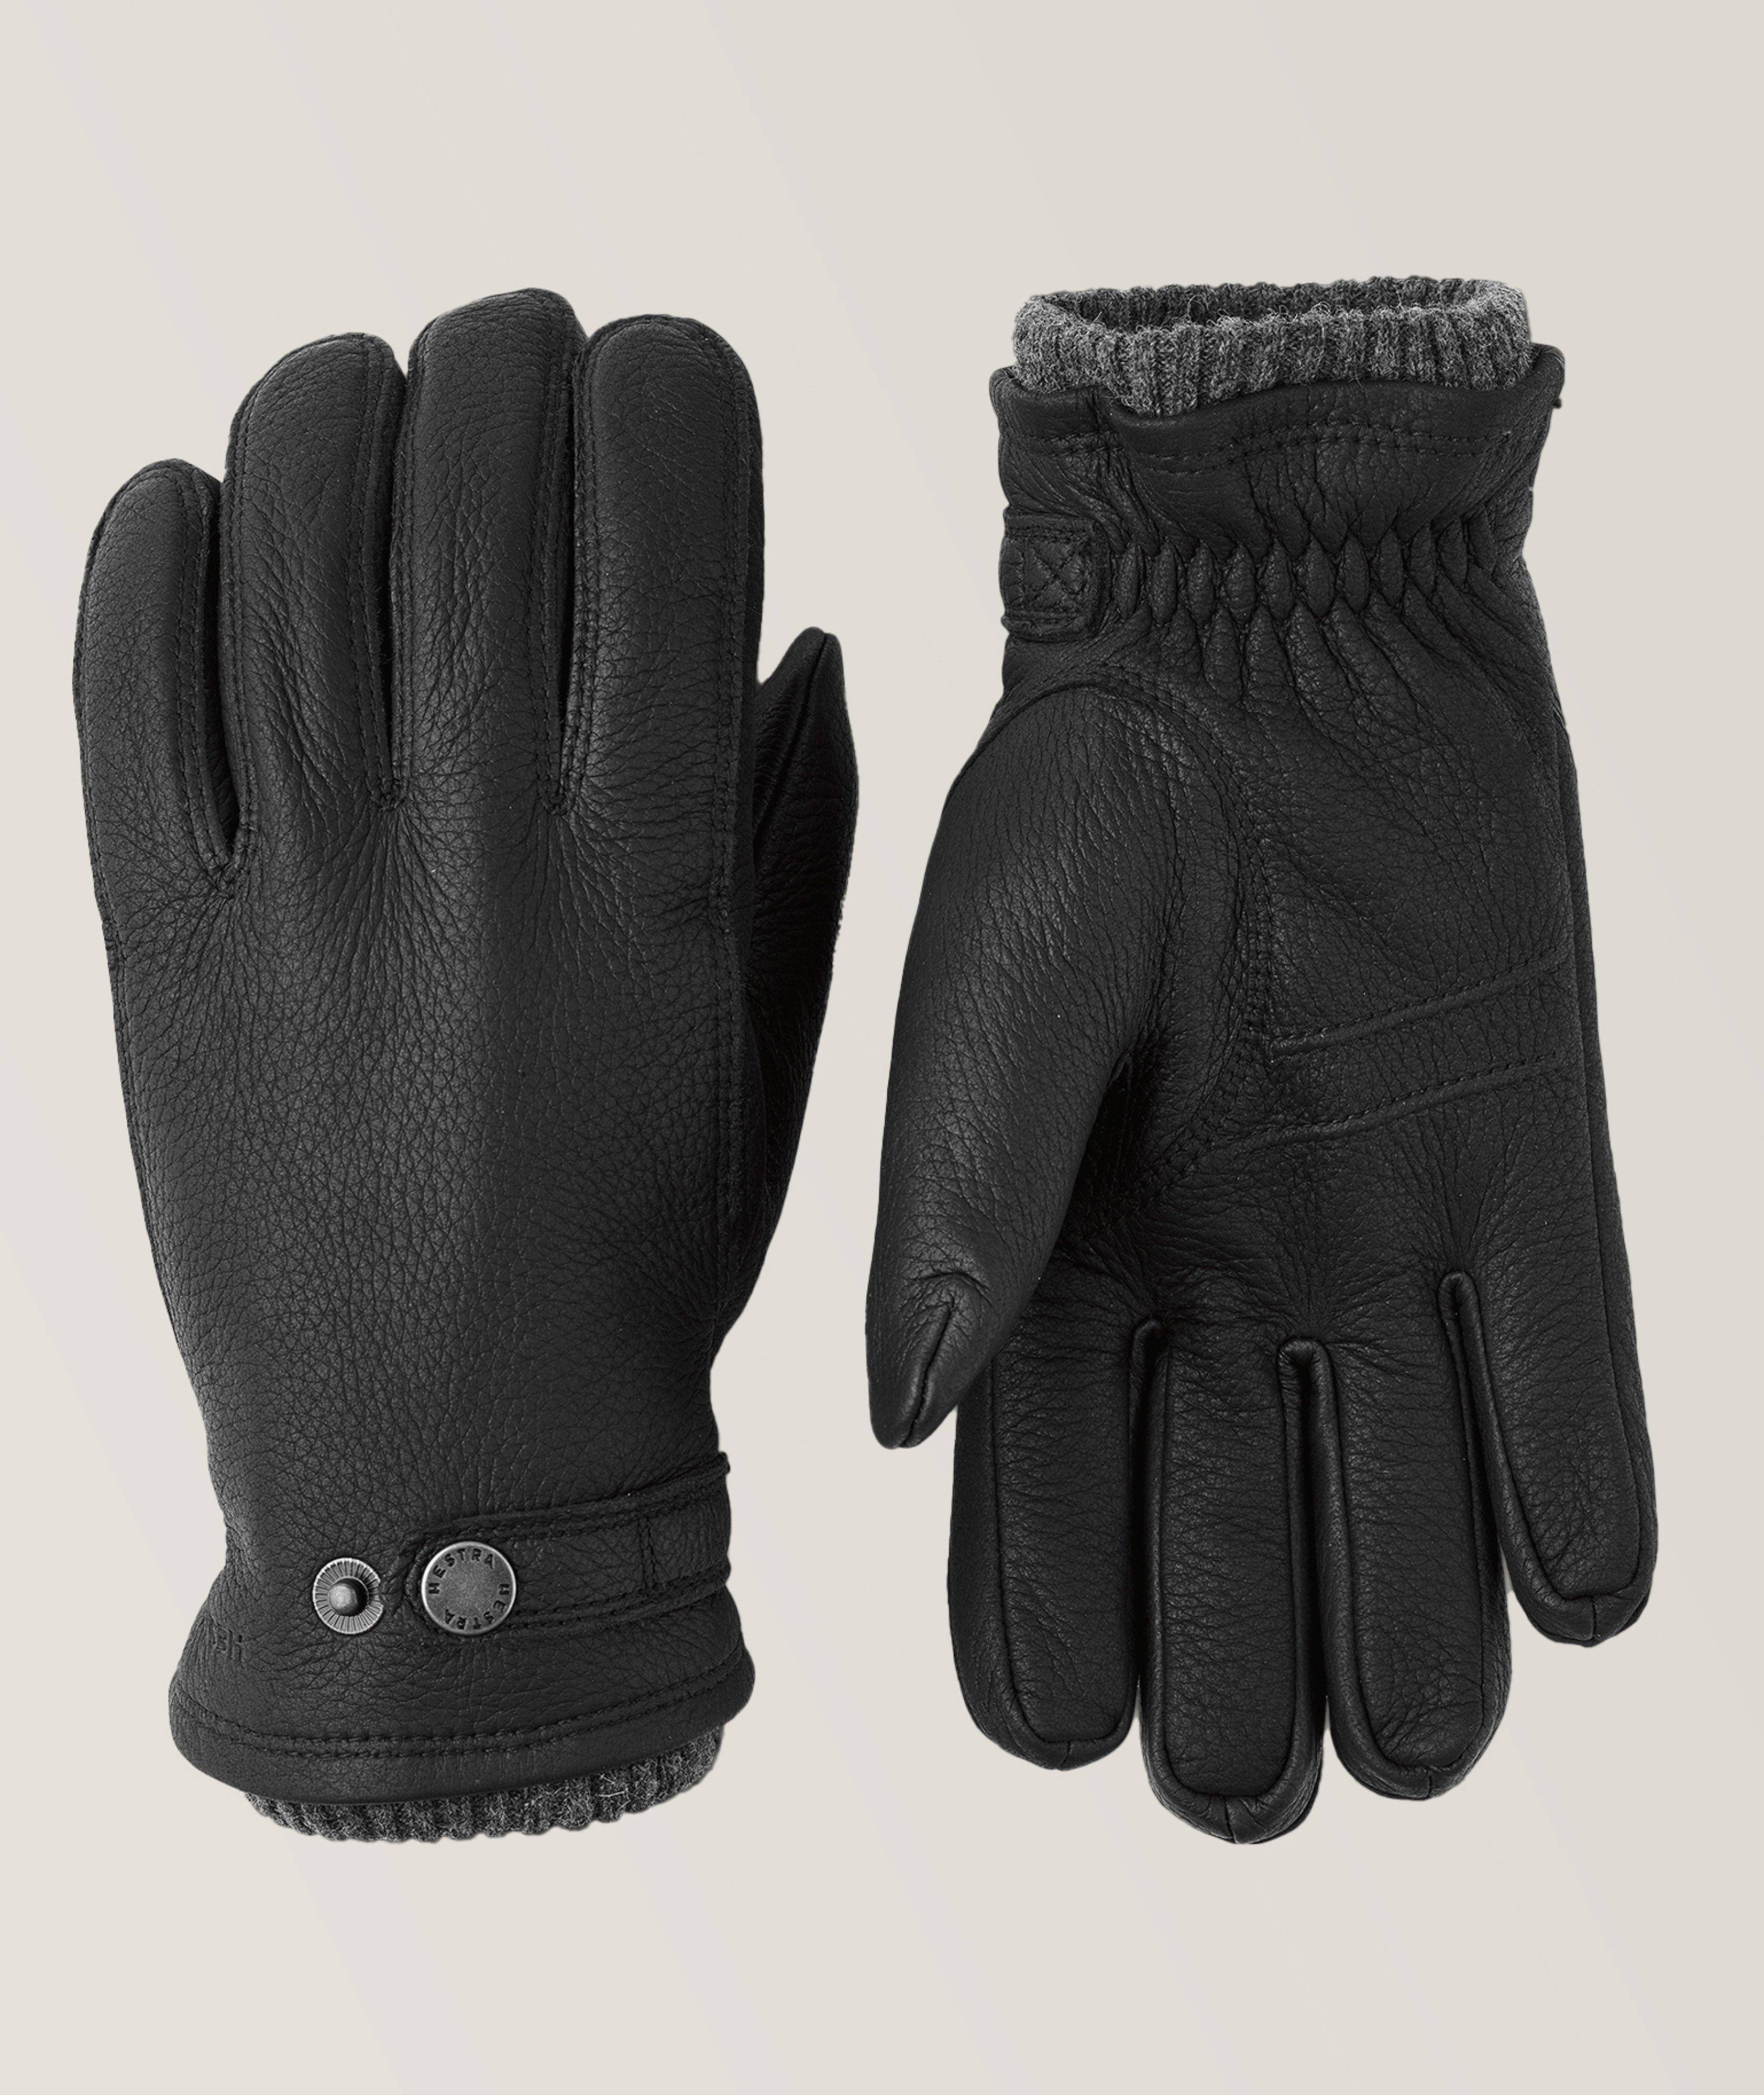 Utsjö Elk Leather Gloves image 0